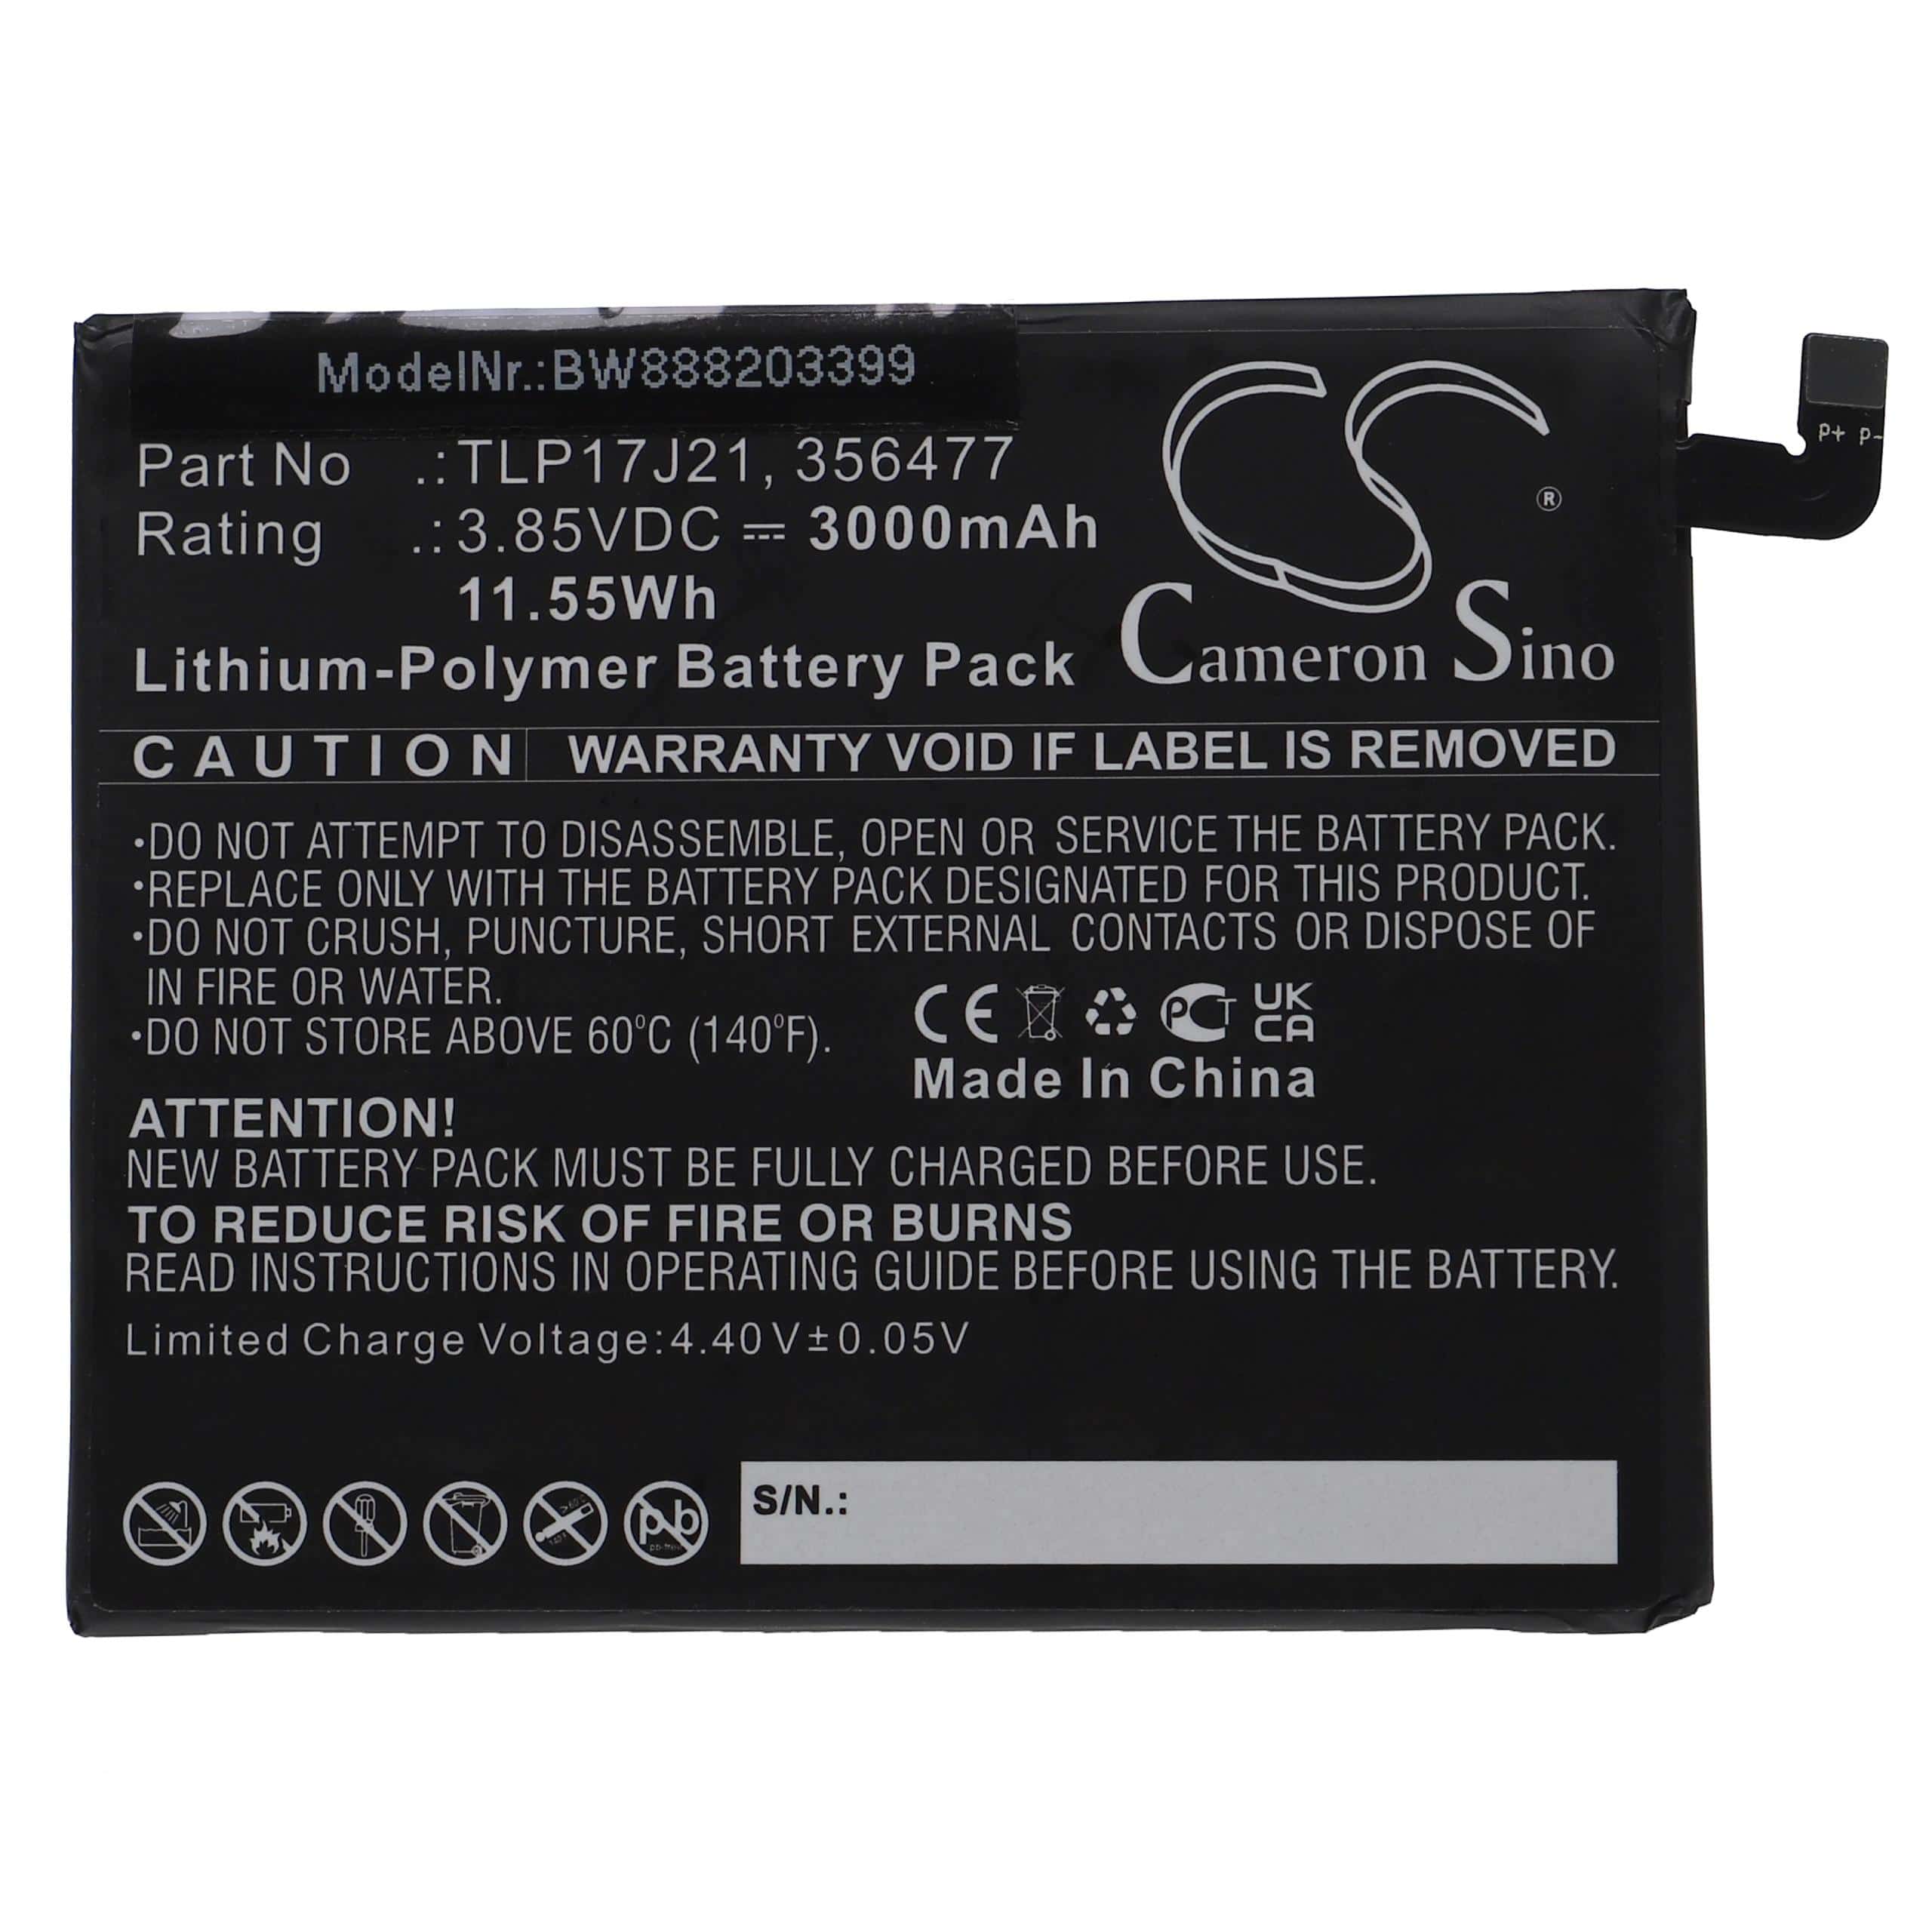 Akumulator bateria do telefonu smartfona zam. Wiko TLP17J21, 356477 - 3000mAh, 3,85V, LiPo